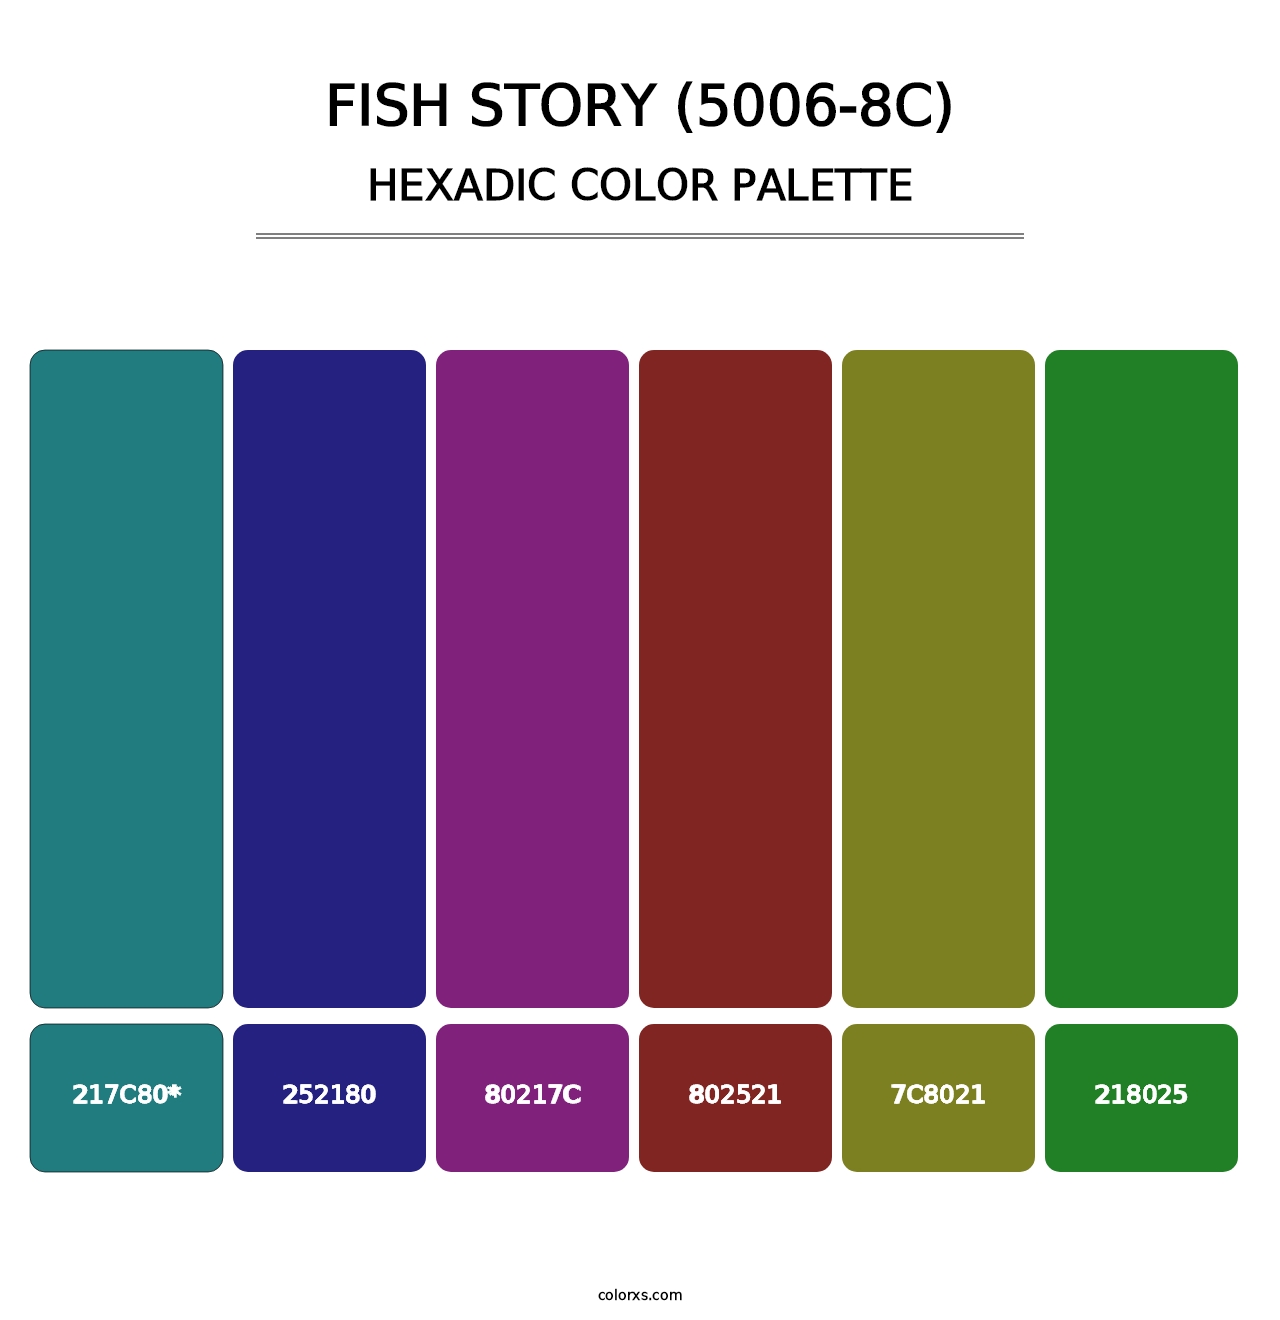 Fish Story (5006-8C) - Hexadic Color Palette